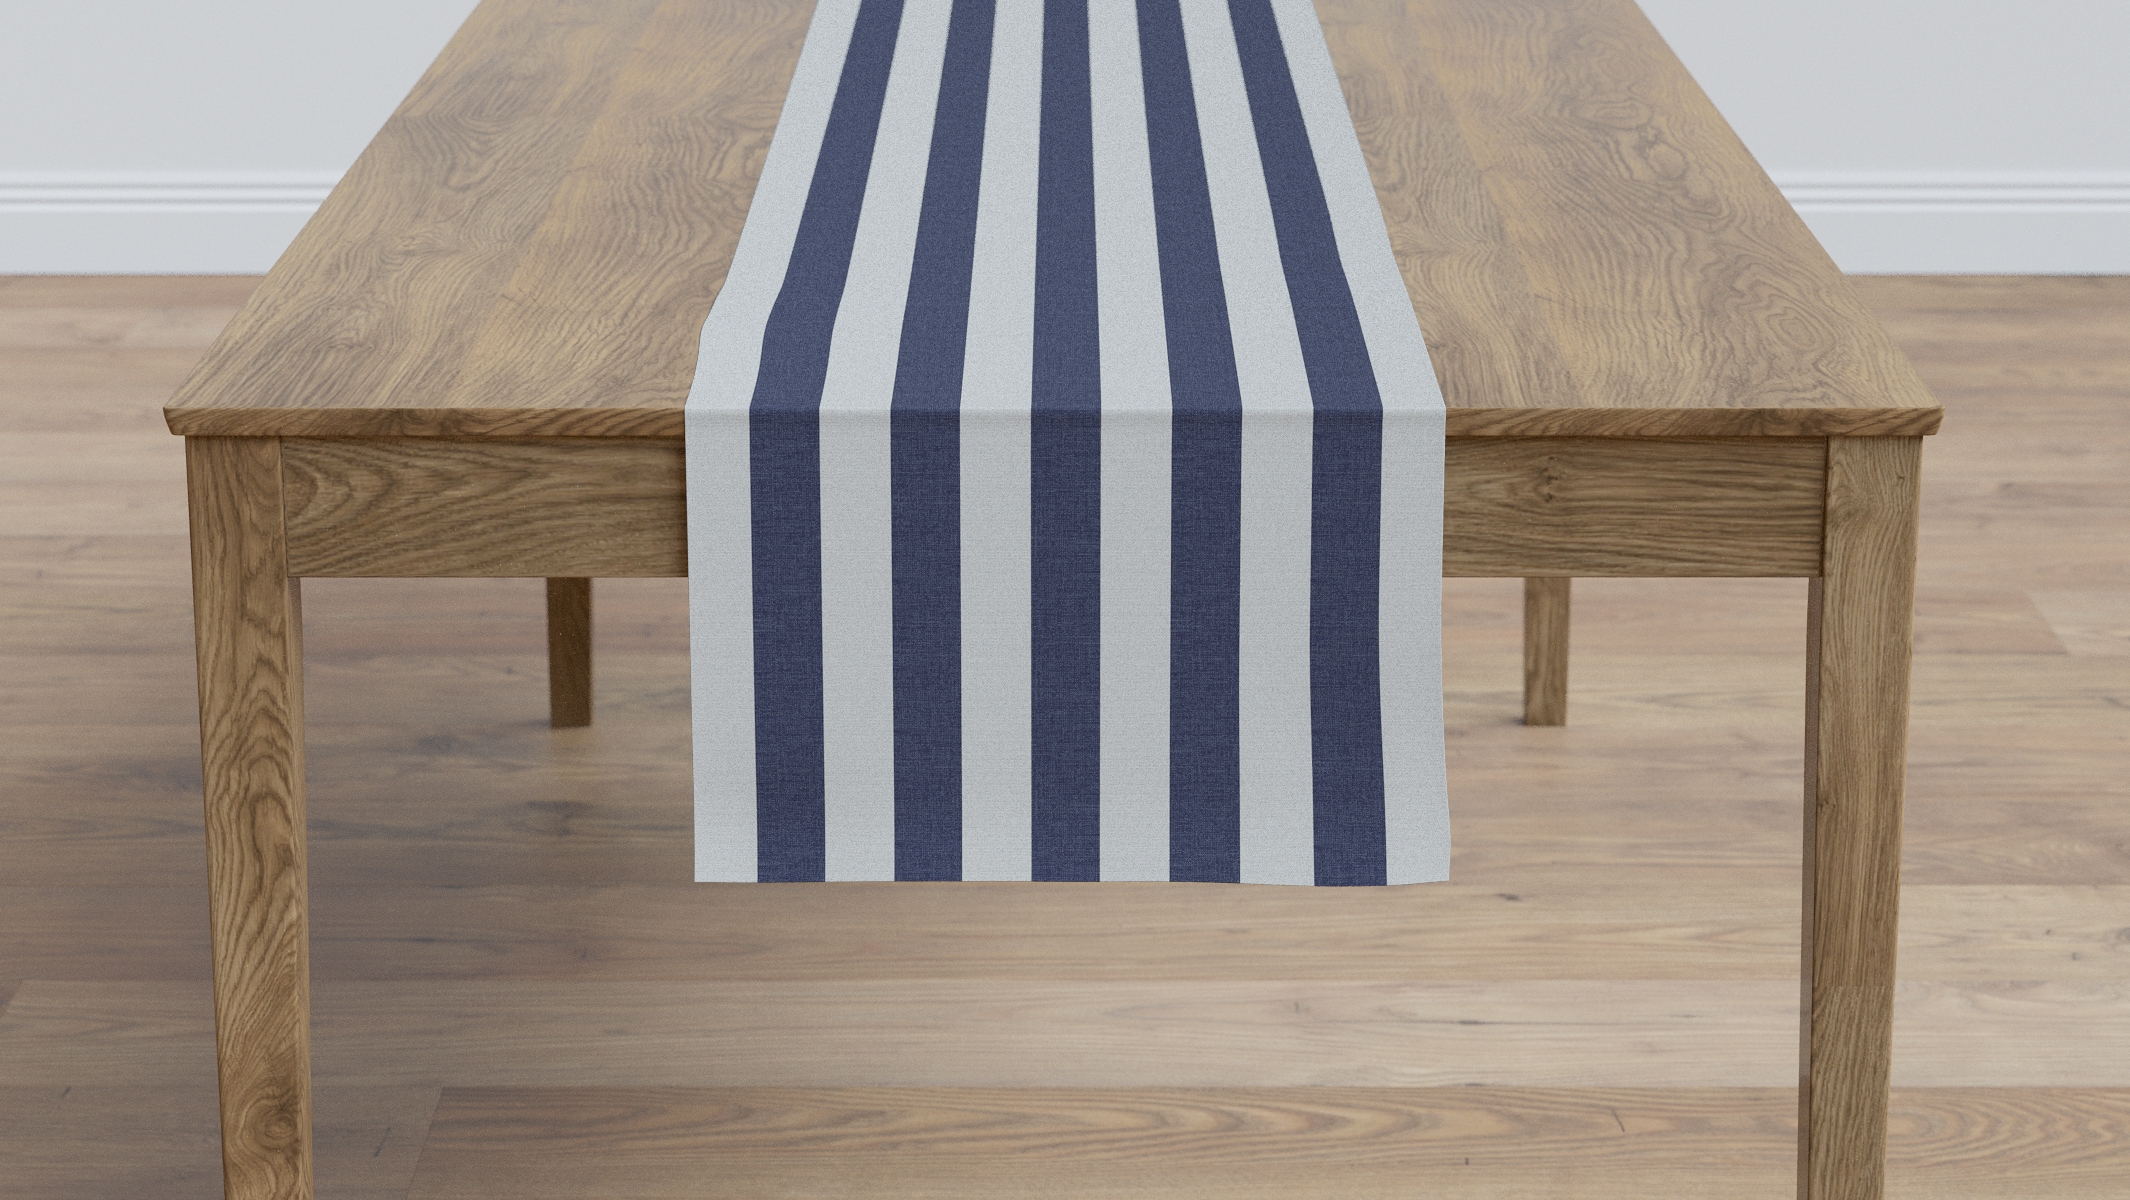 Table Runner 16" x 120", Navy Cabana Stripe, 16" x 120" - Image 1